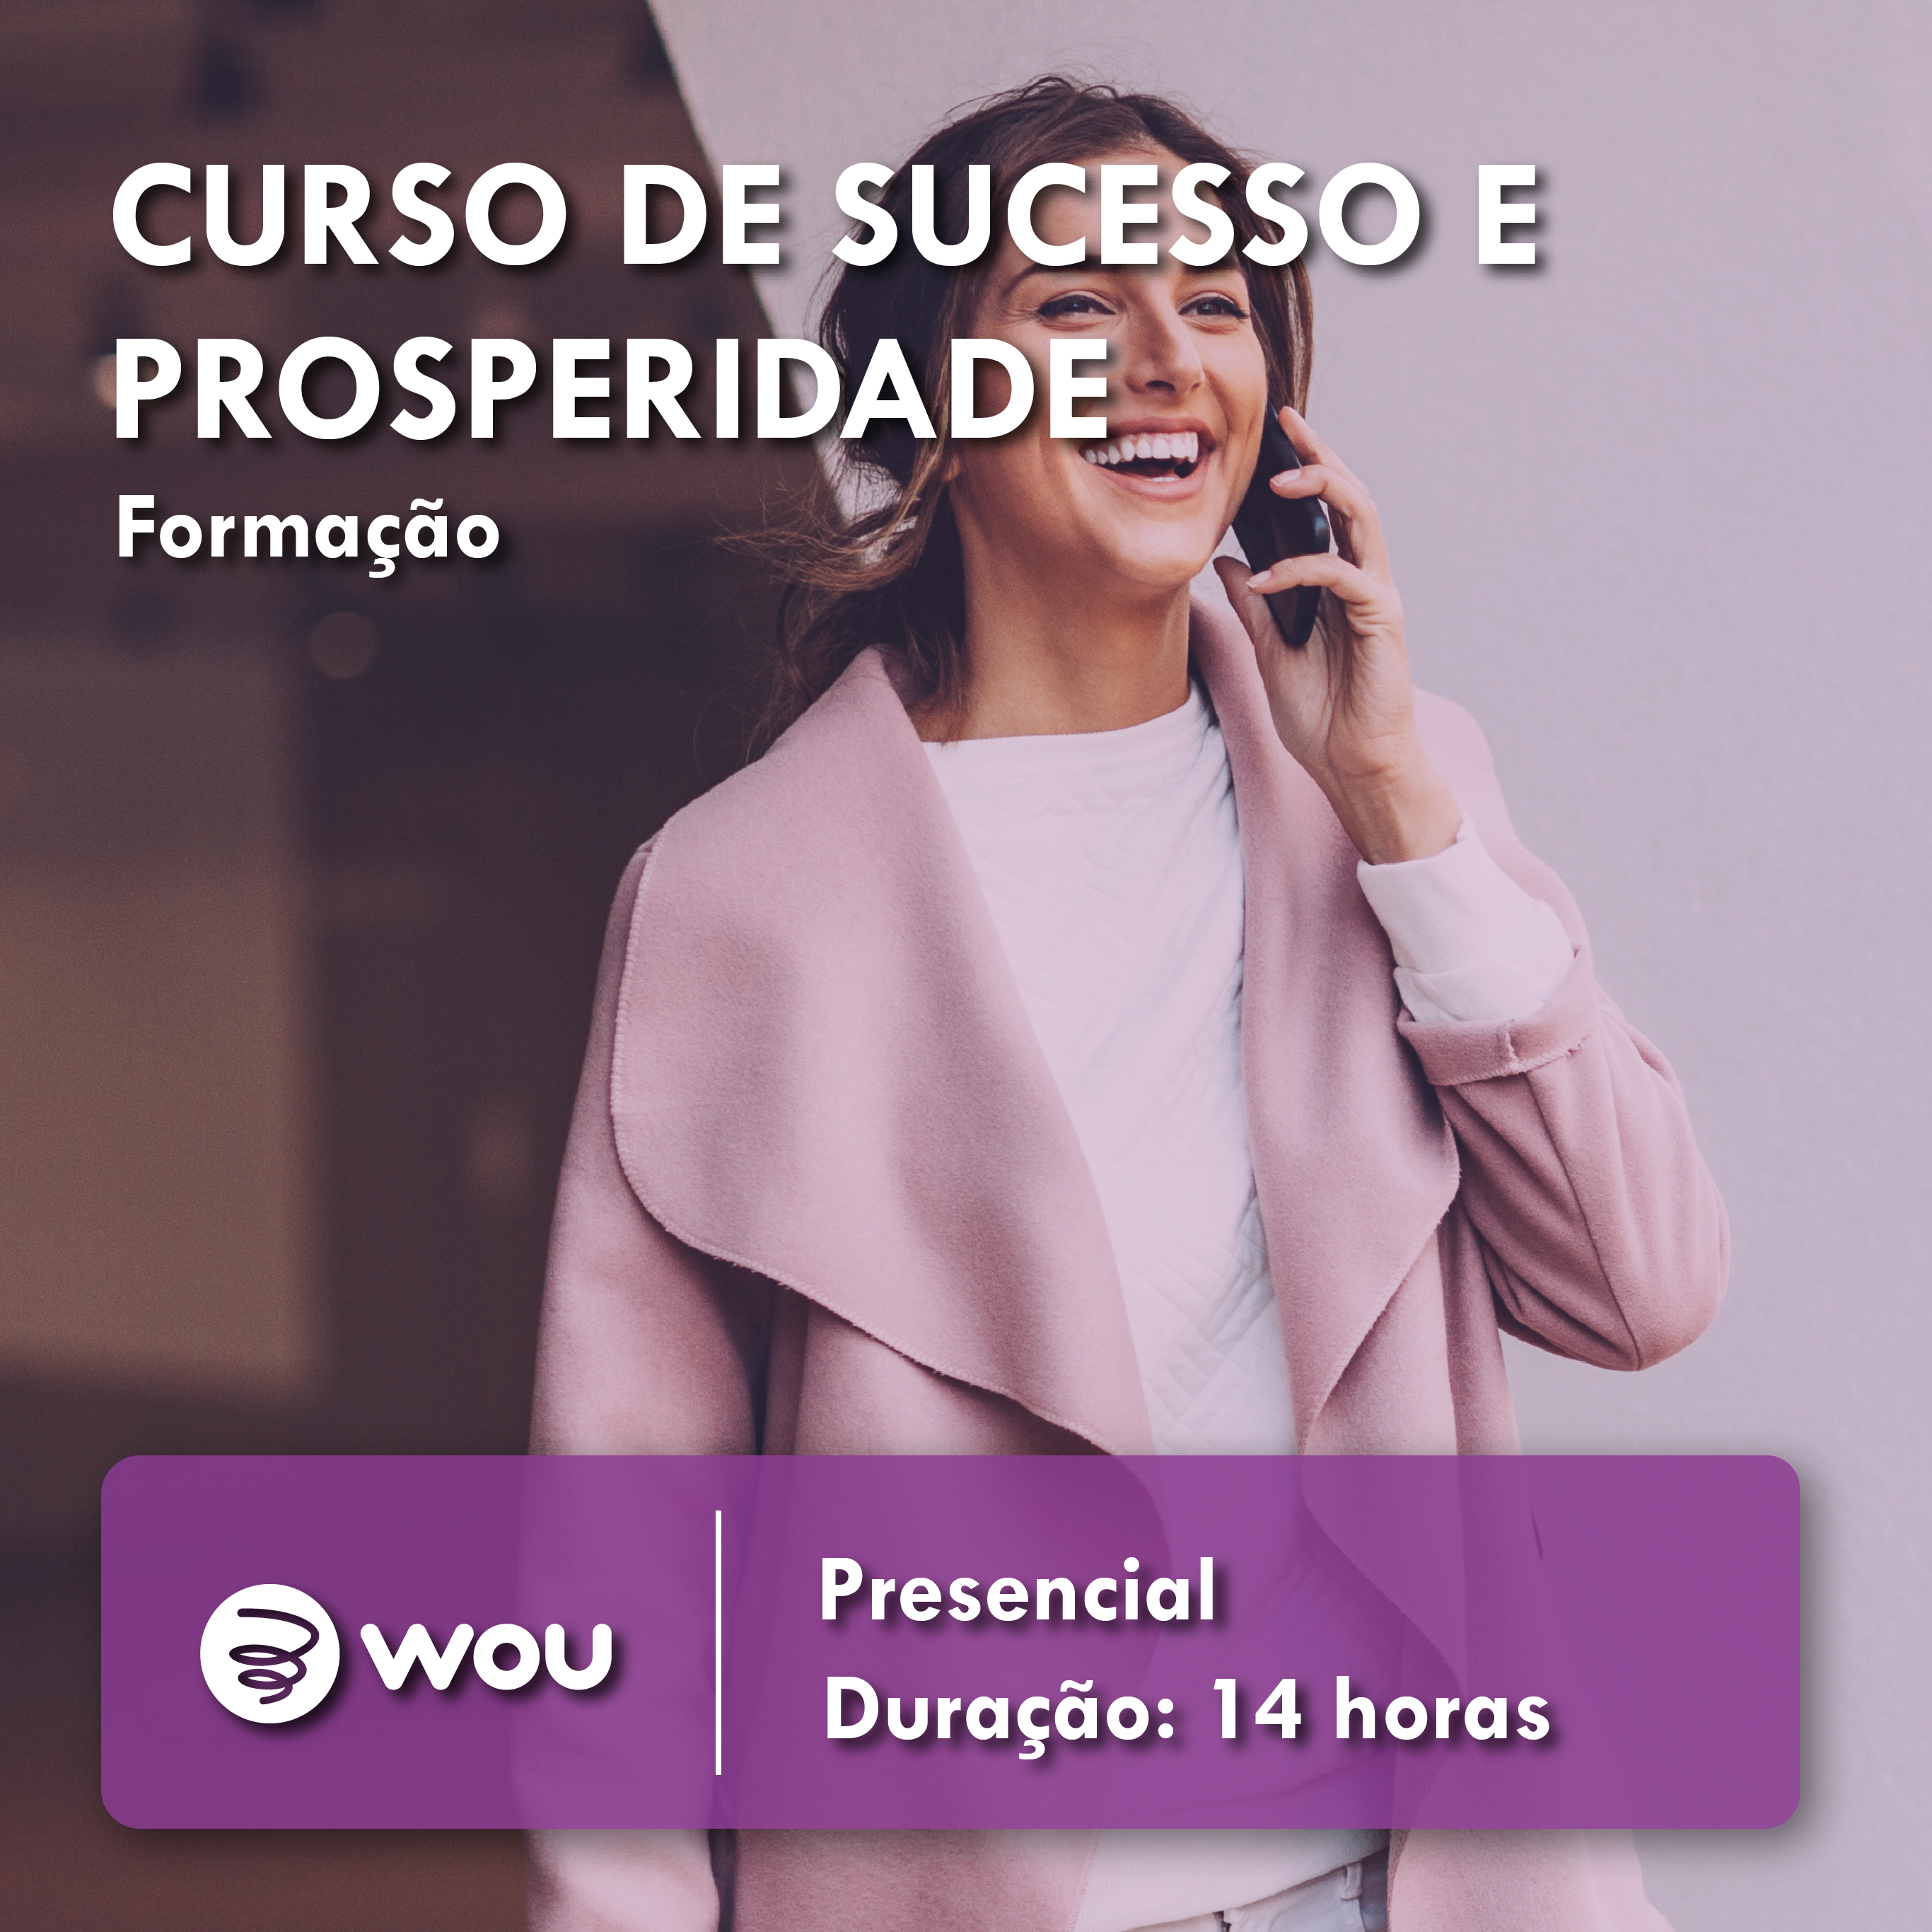 Success and Prosperity Course in Figueira da Foz